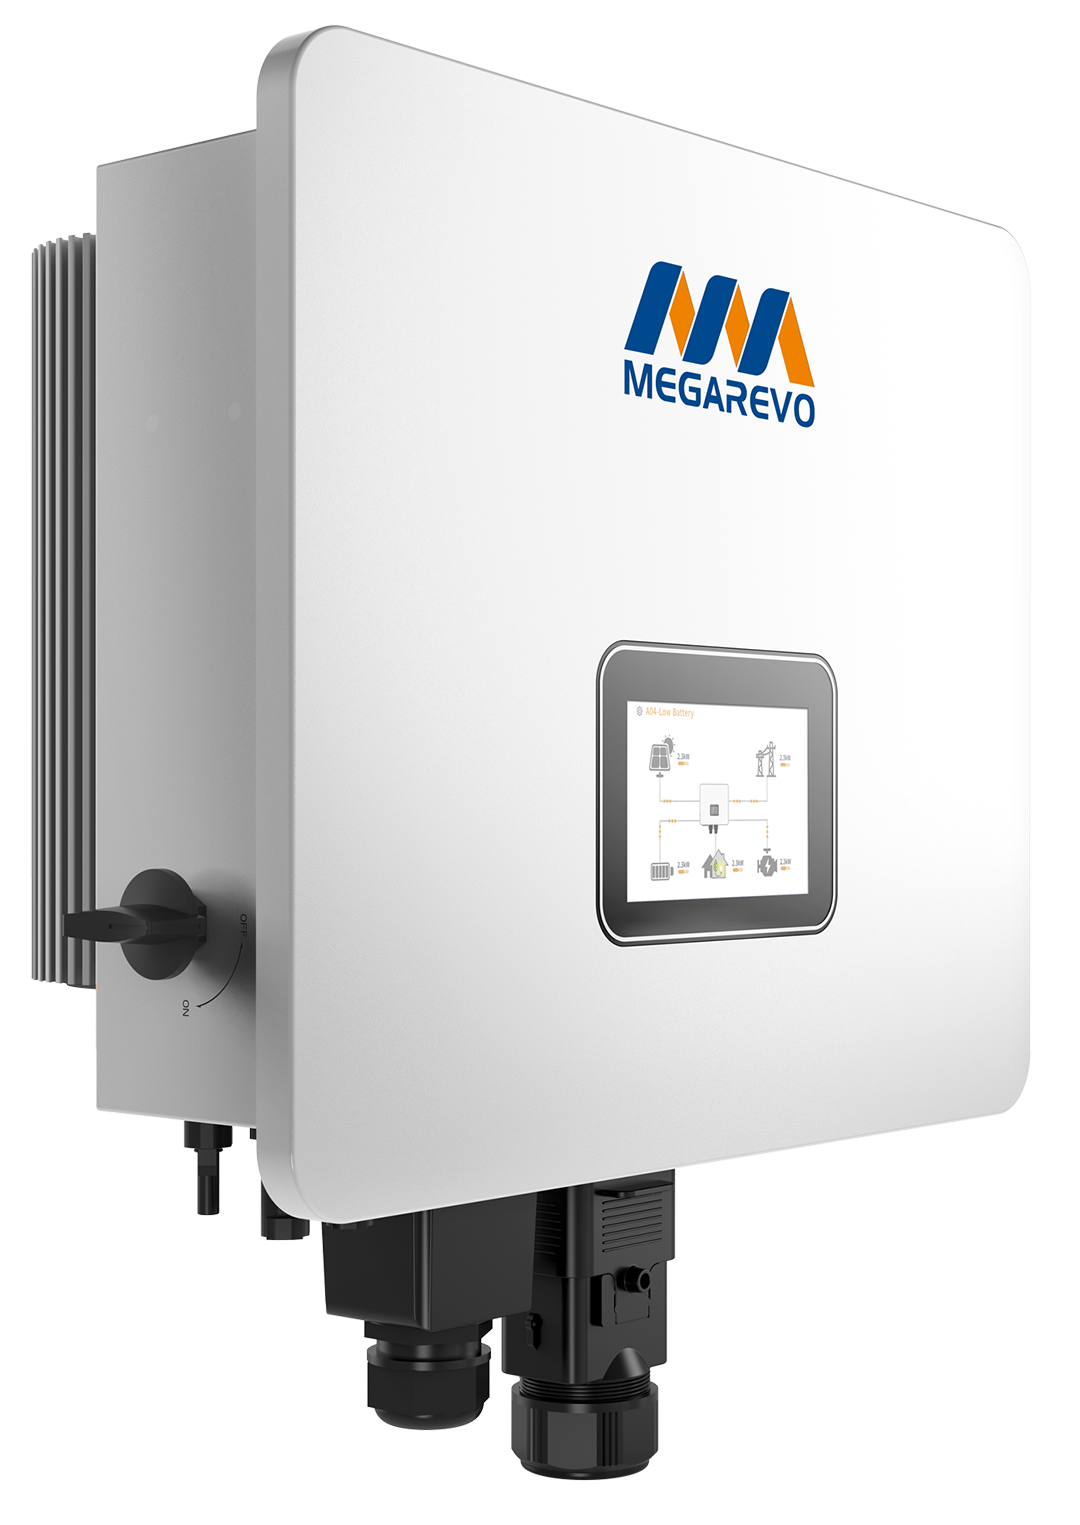 REVO residential energy storage inverter